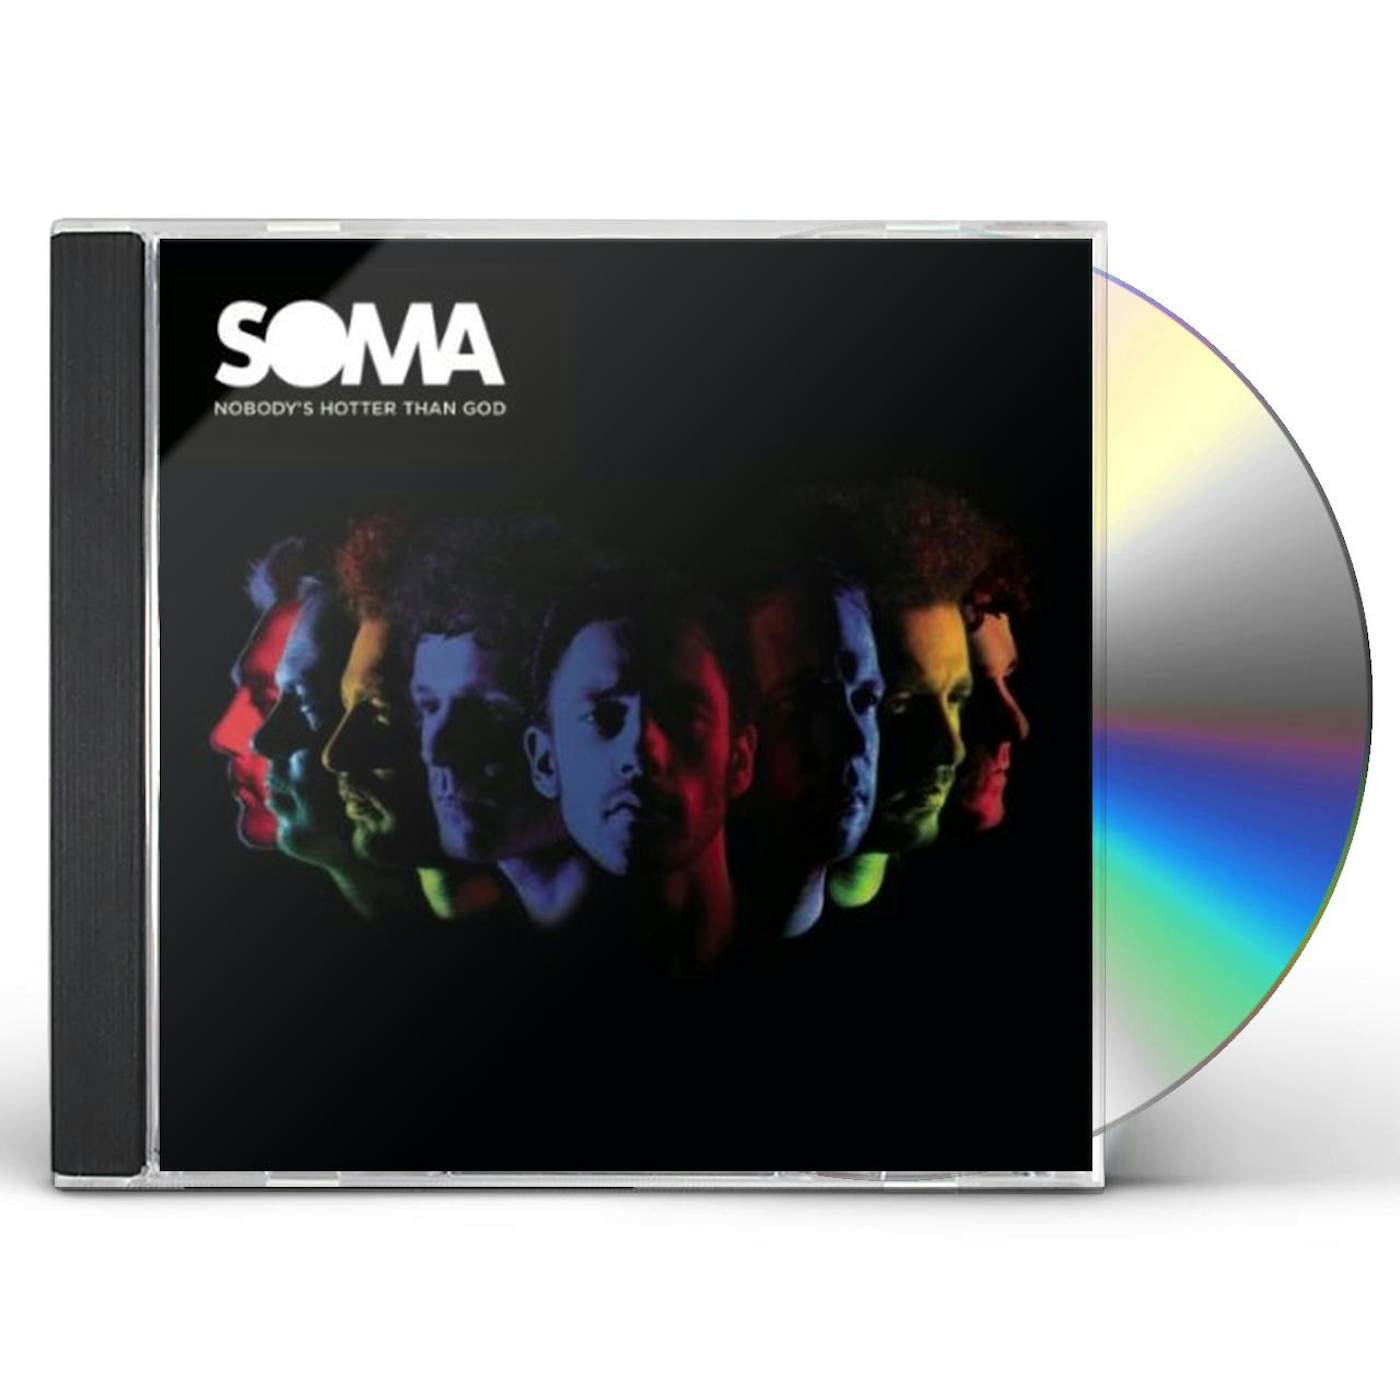 Soma NOBODY'S HOTTER THAN GOD CD